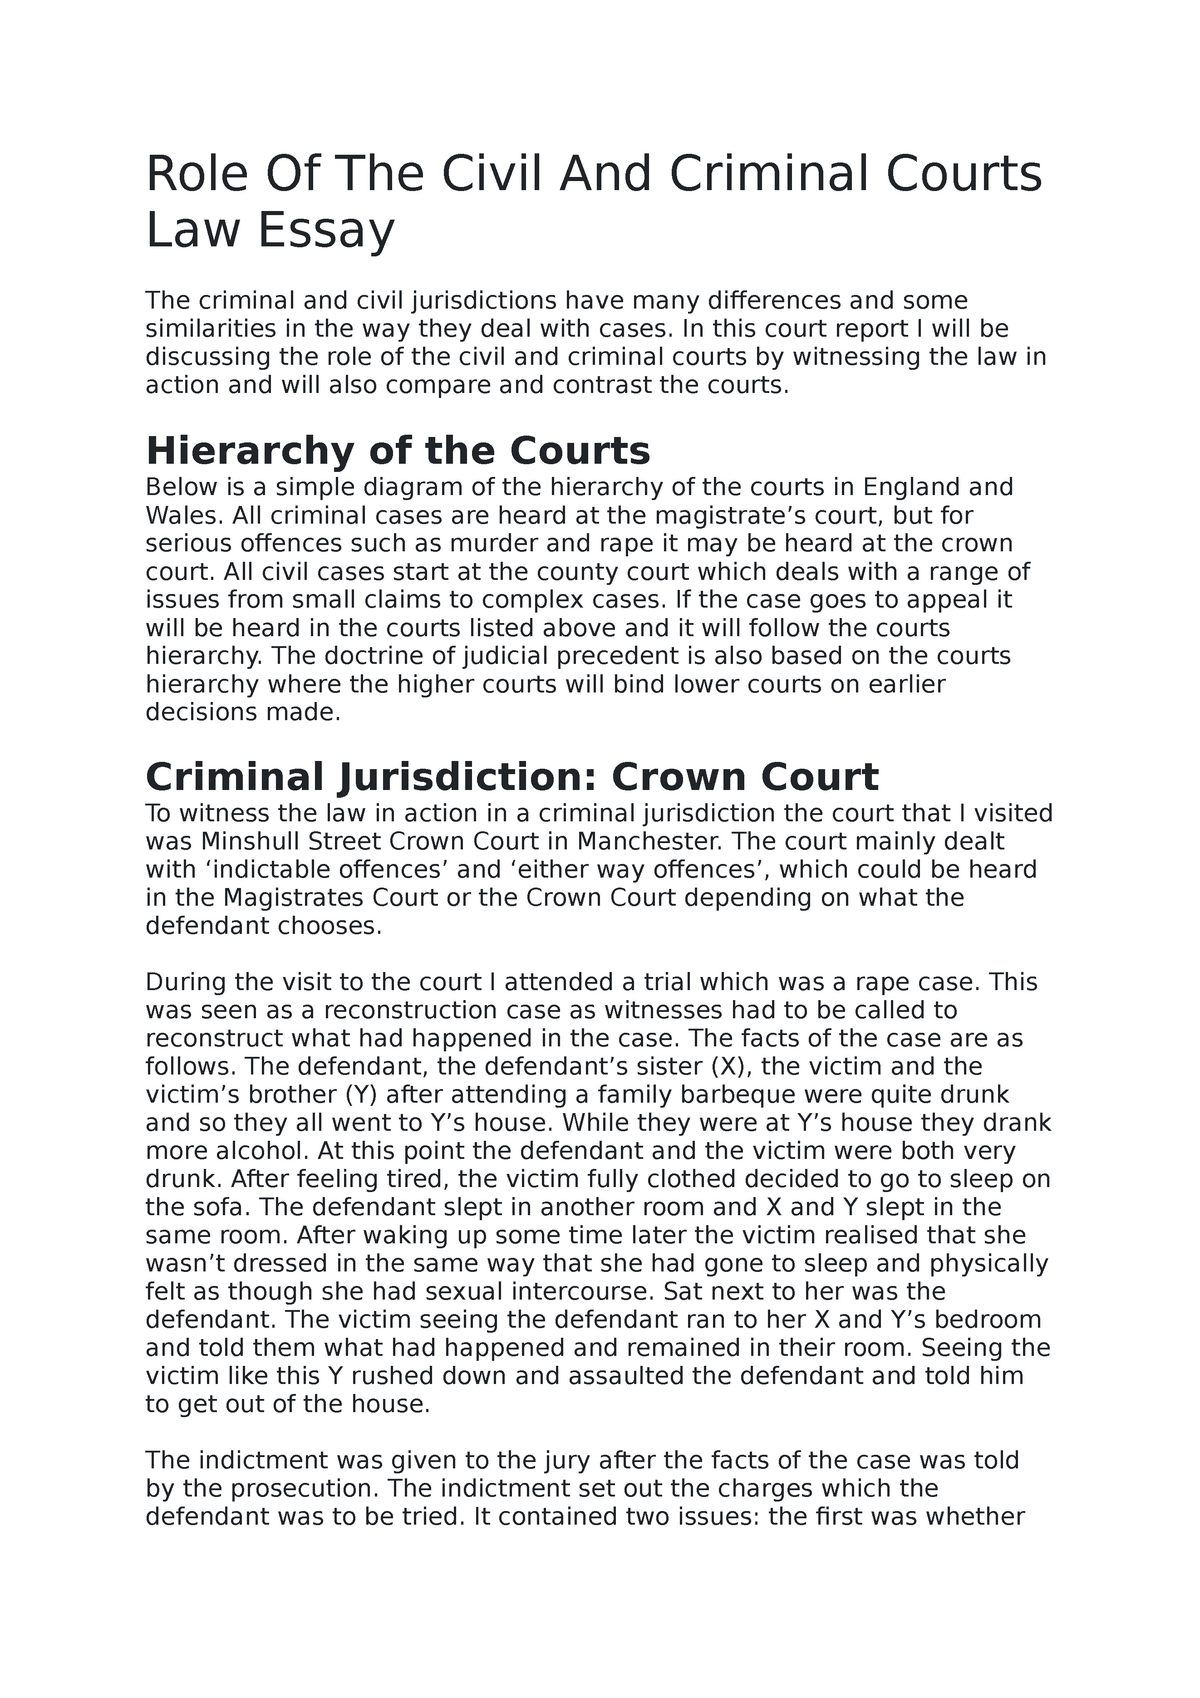 criminal law essay